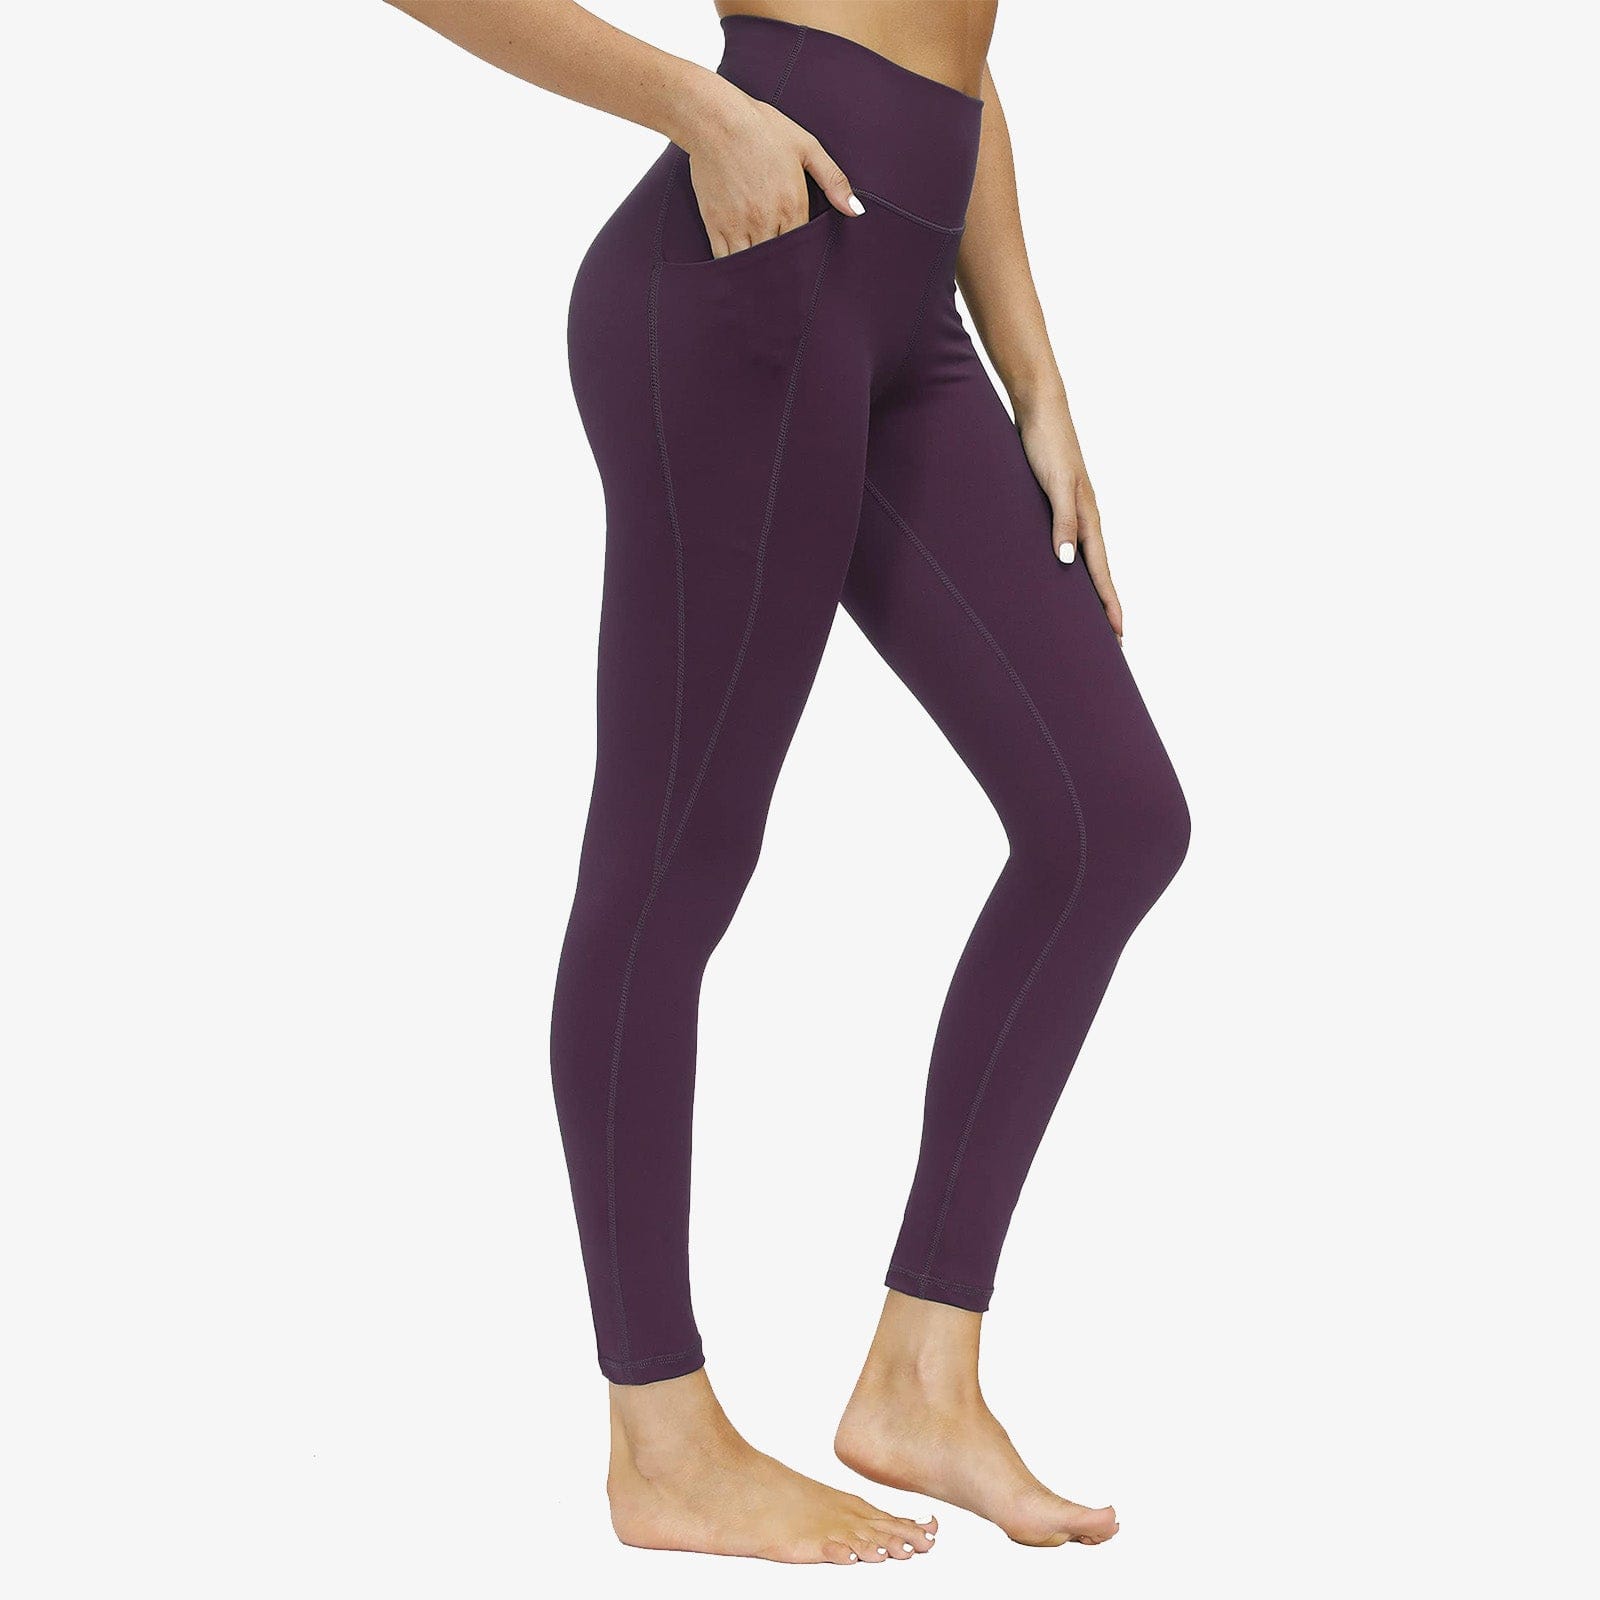 Women's High Waist Workout Yoga Pants Athletic Legging - Deep Violet / S